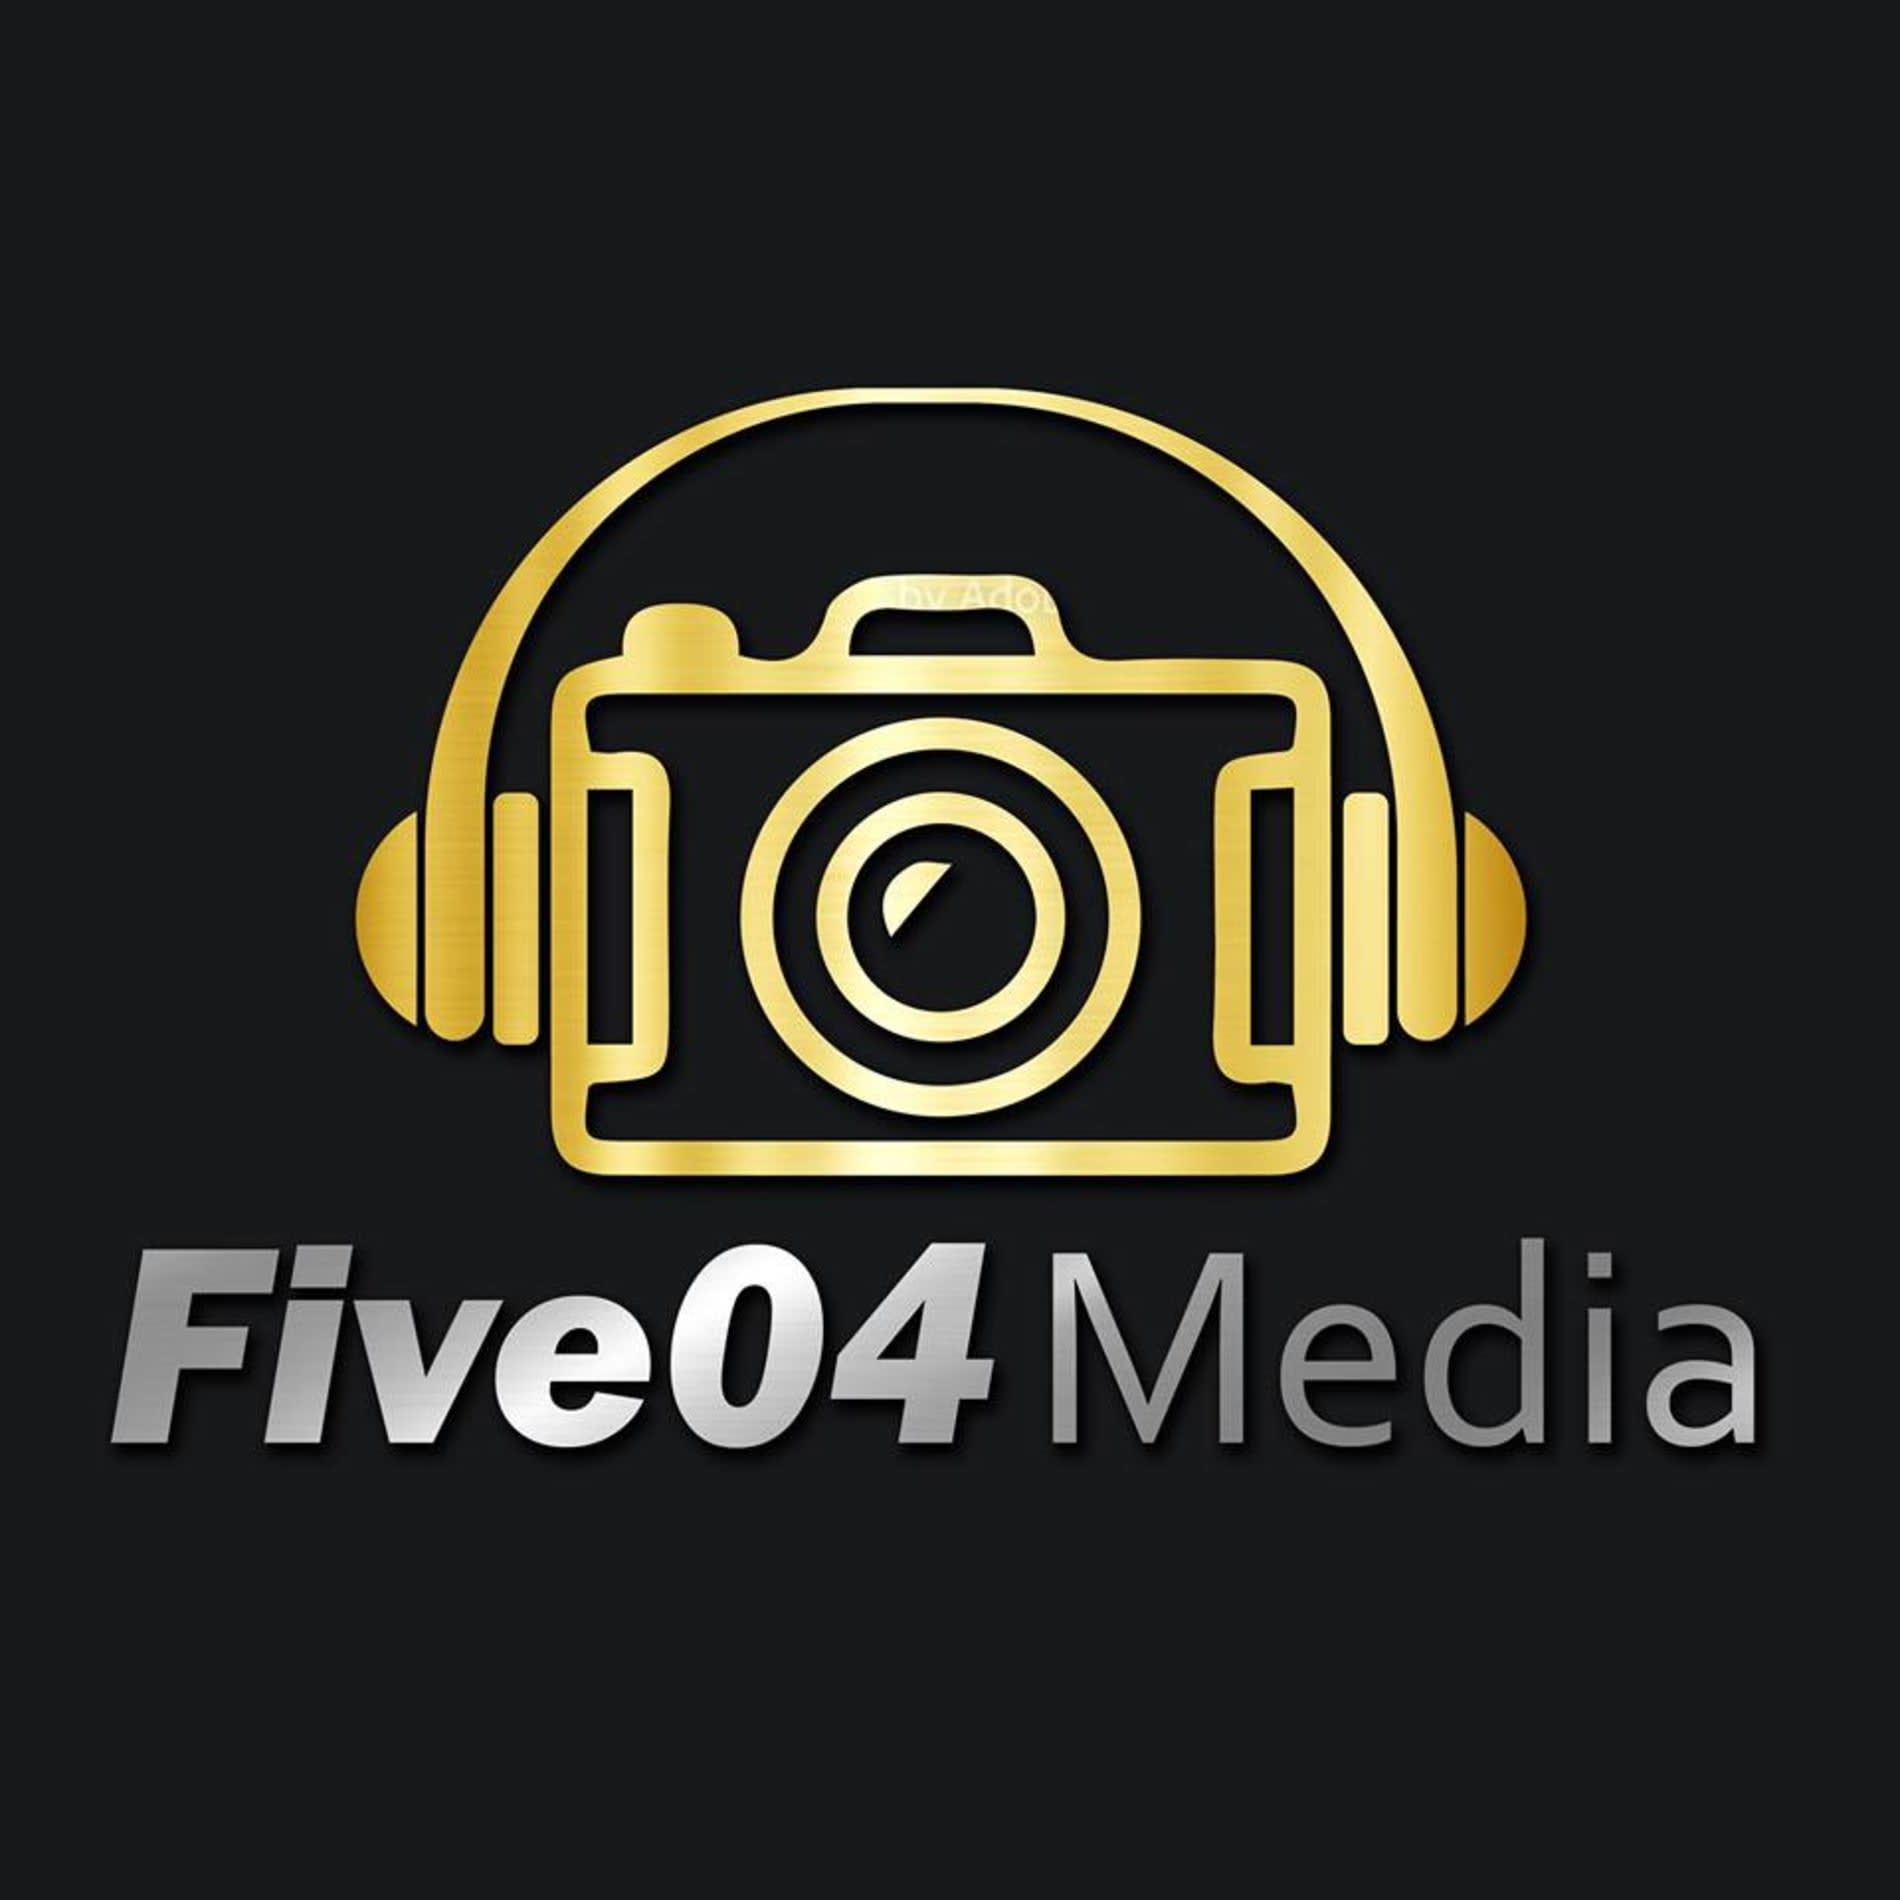 Five04 Media